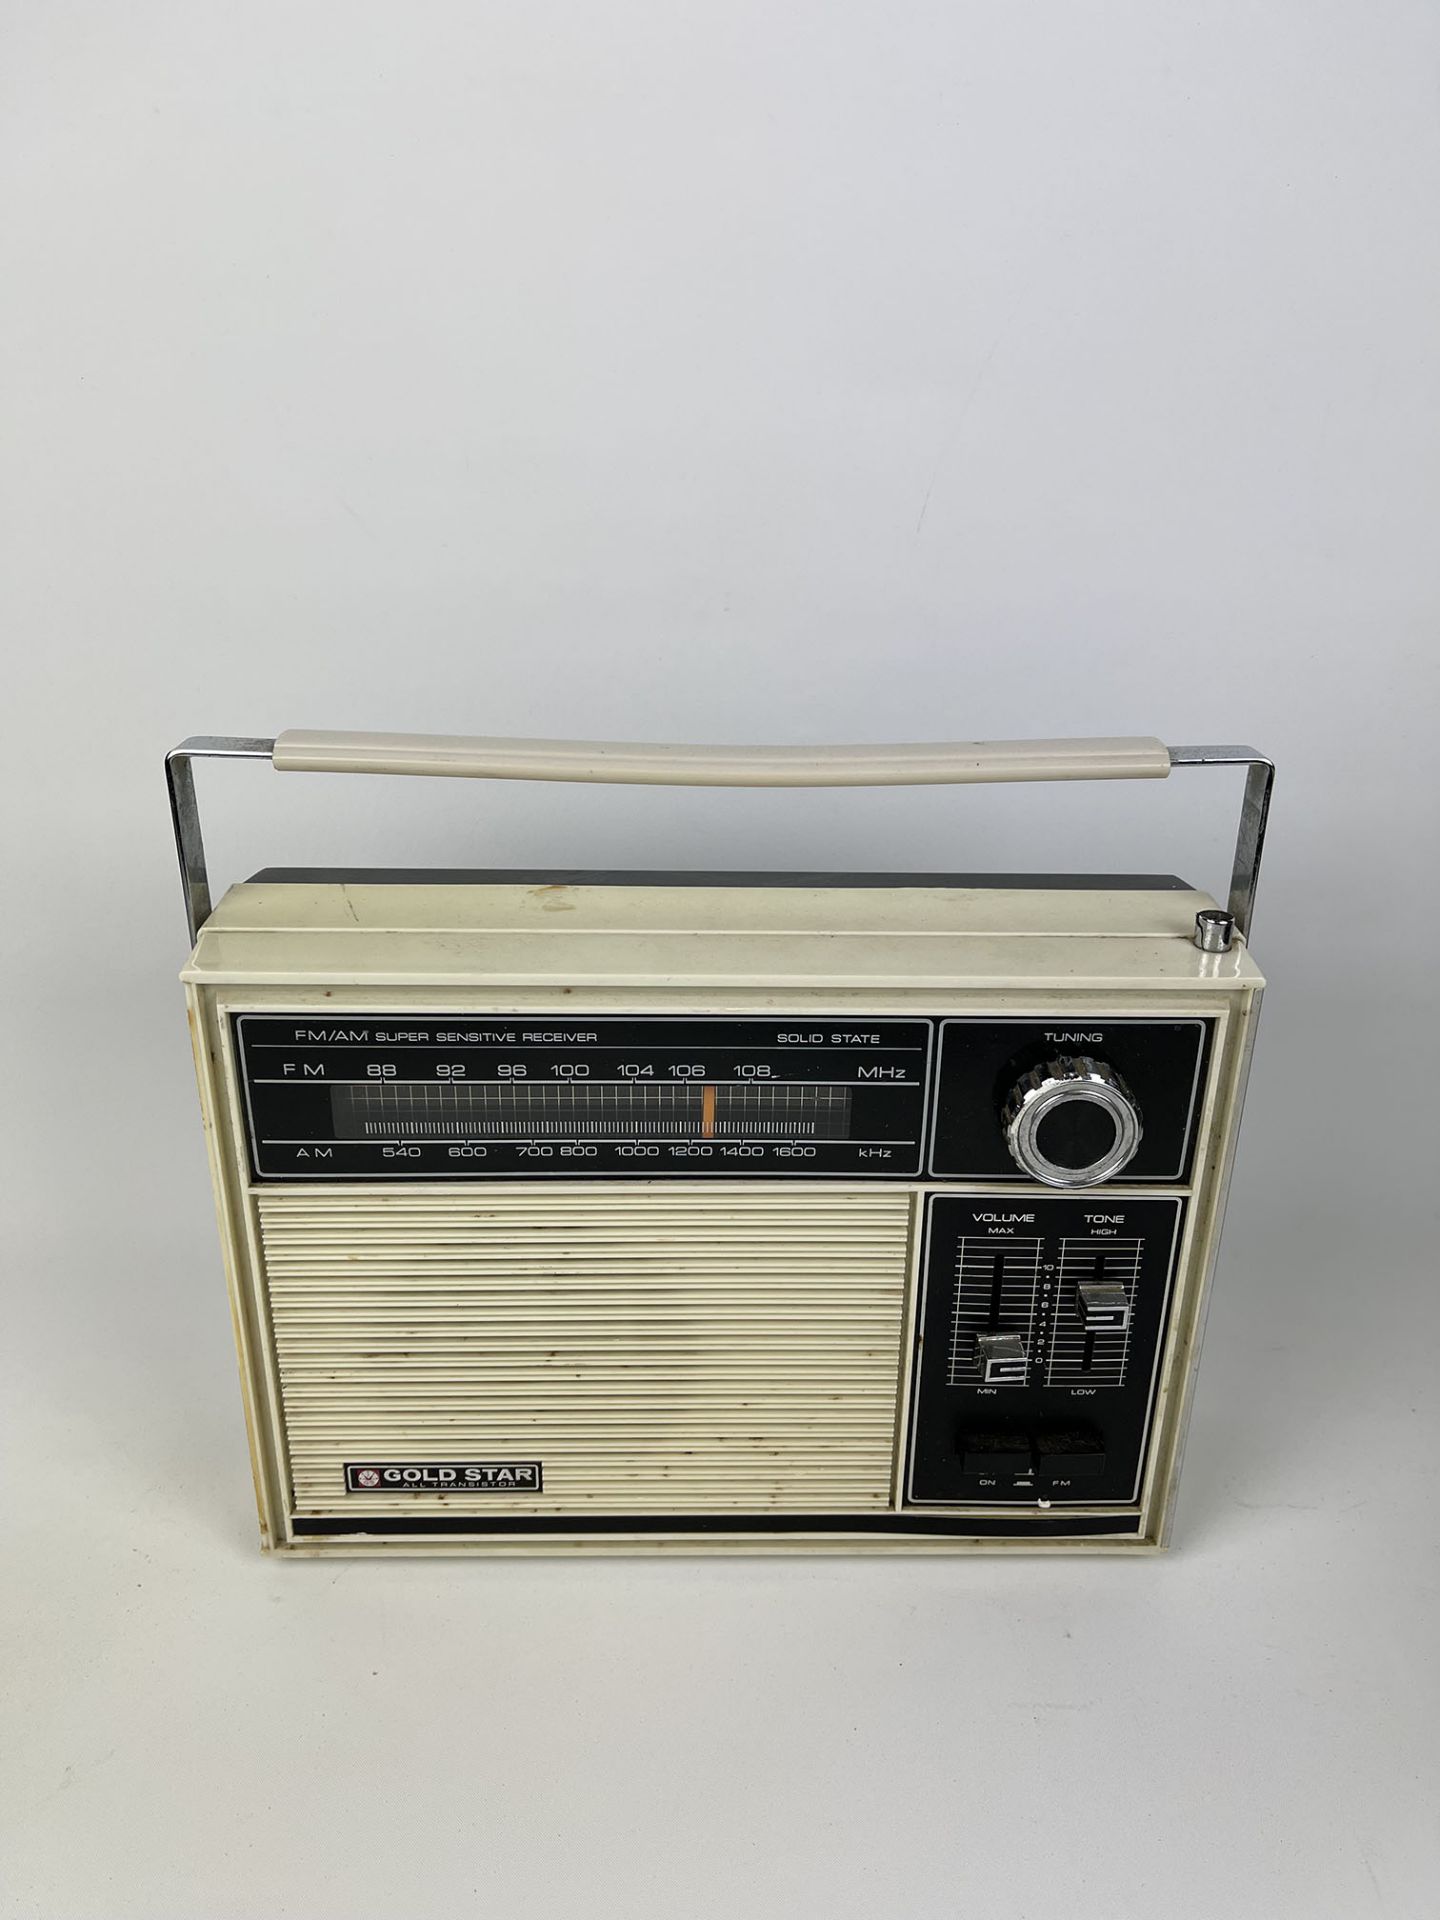 Lot of 4 Vintage Transitor Radioss - Image 3 of 6